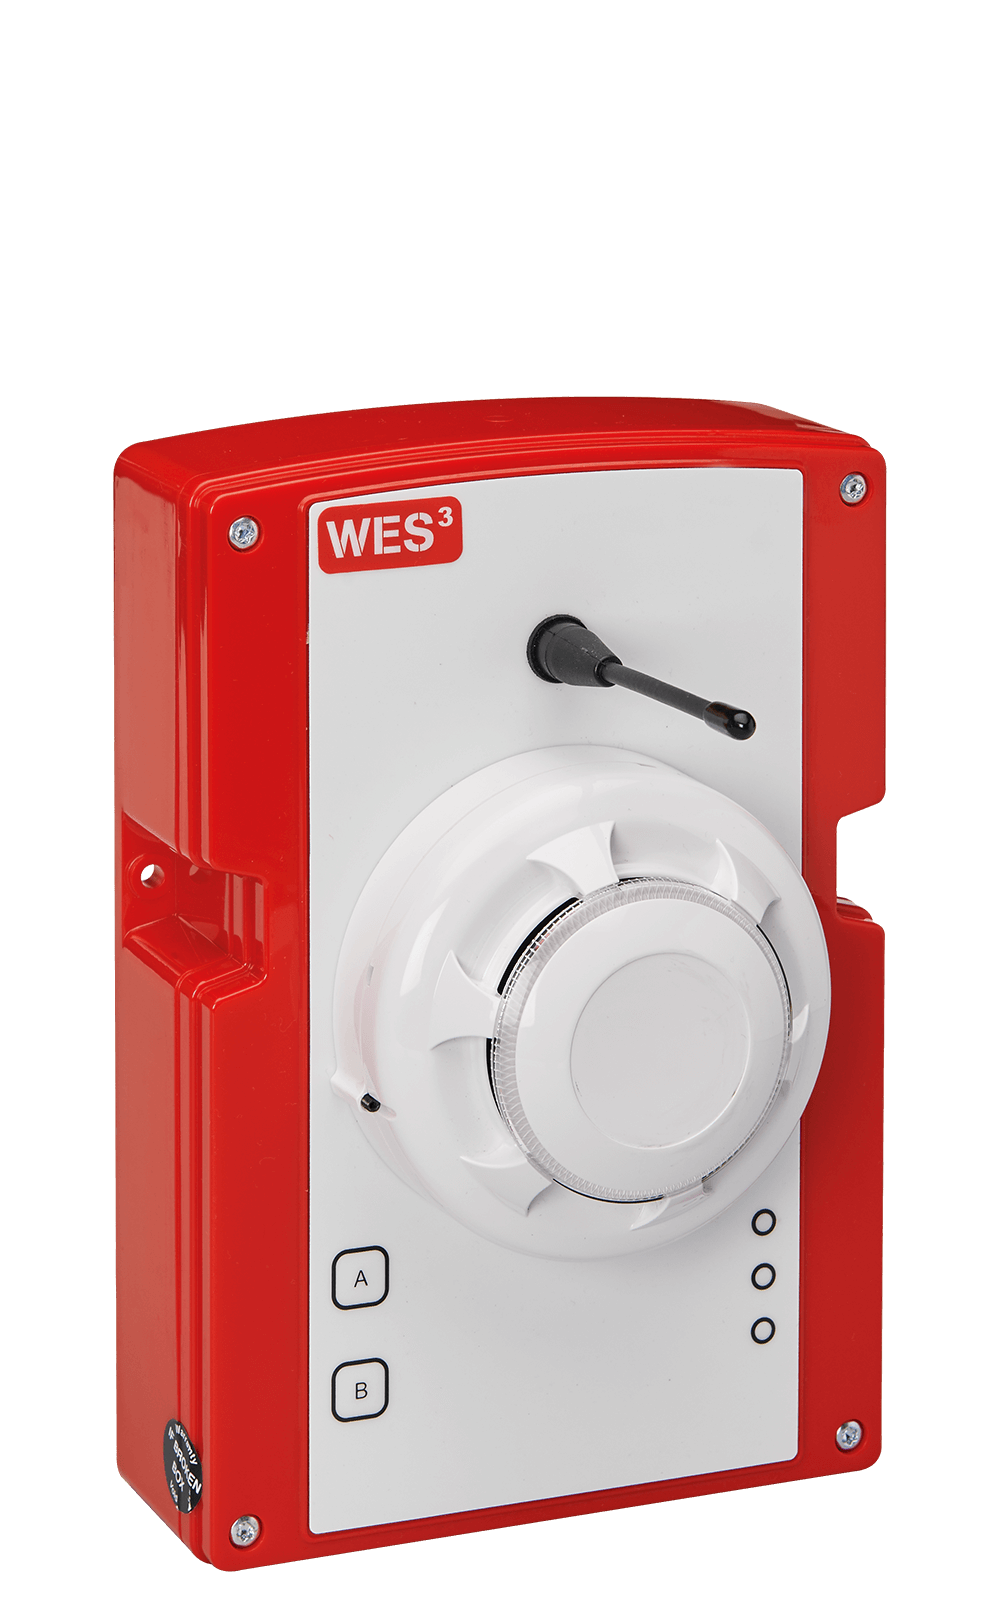 Wes3 Wireless Fire Emergency Alarm Wes Ramtech